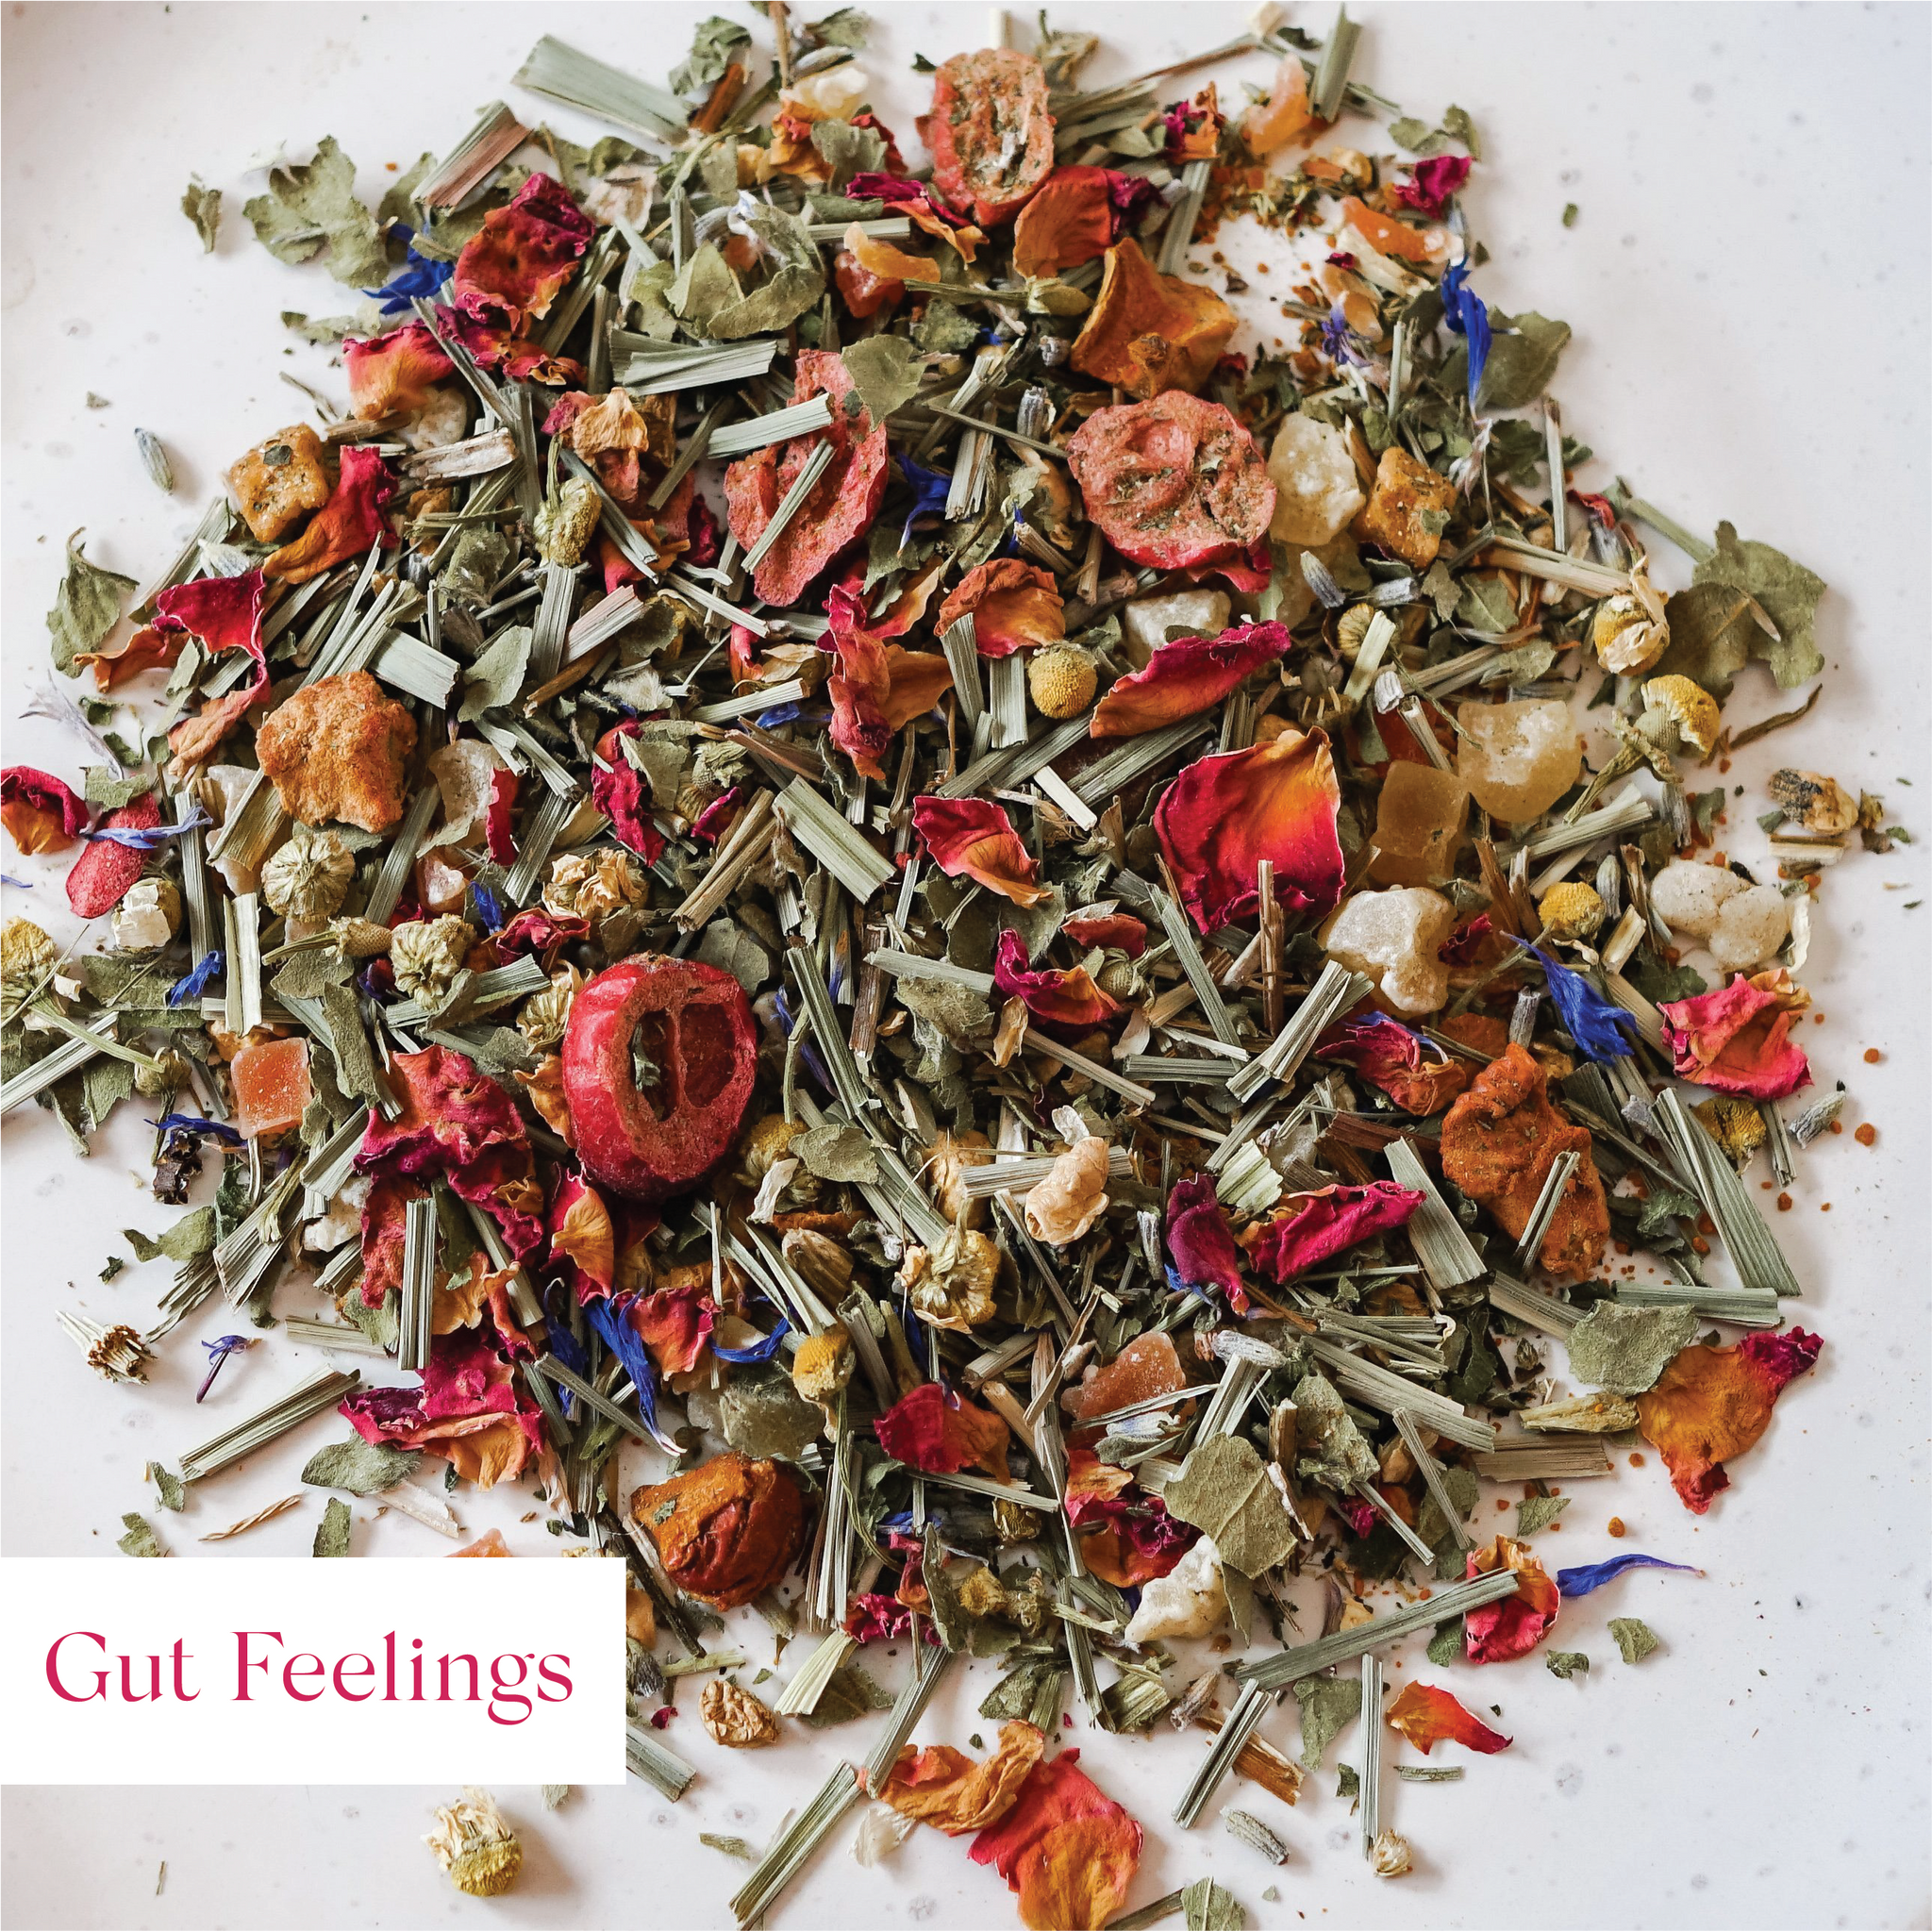 Gut Feelings Glass Jar and Tea